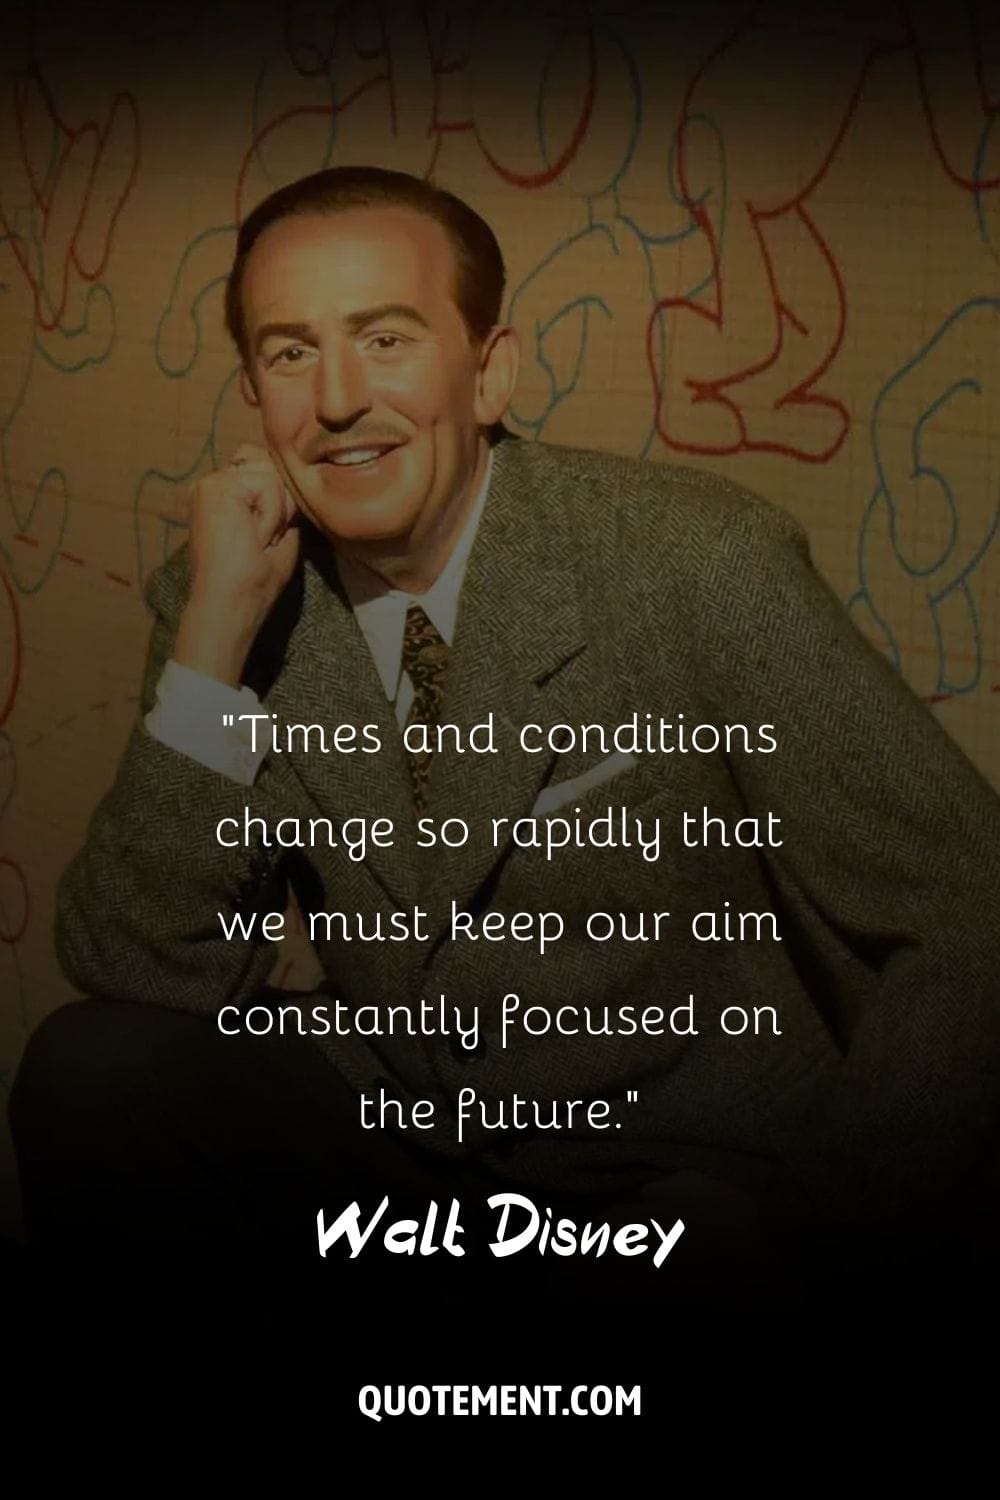 Walt Disney's iconic presence framed in time.